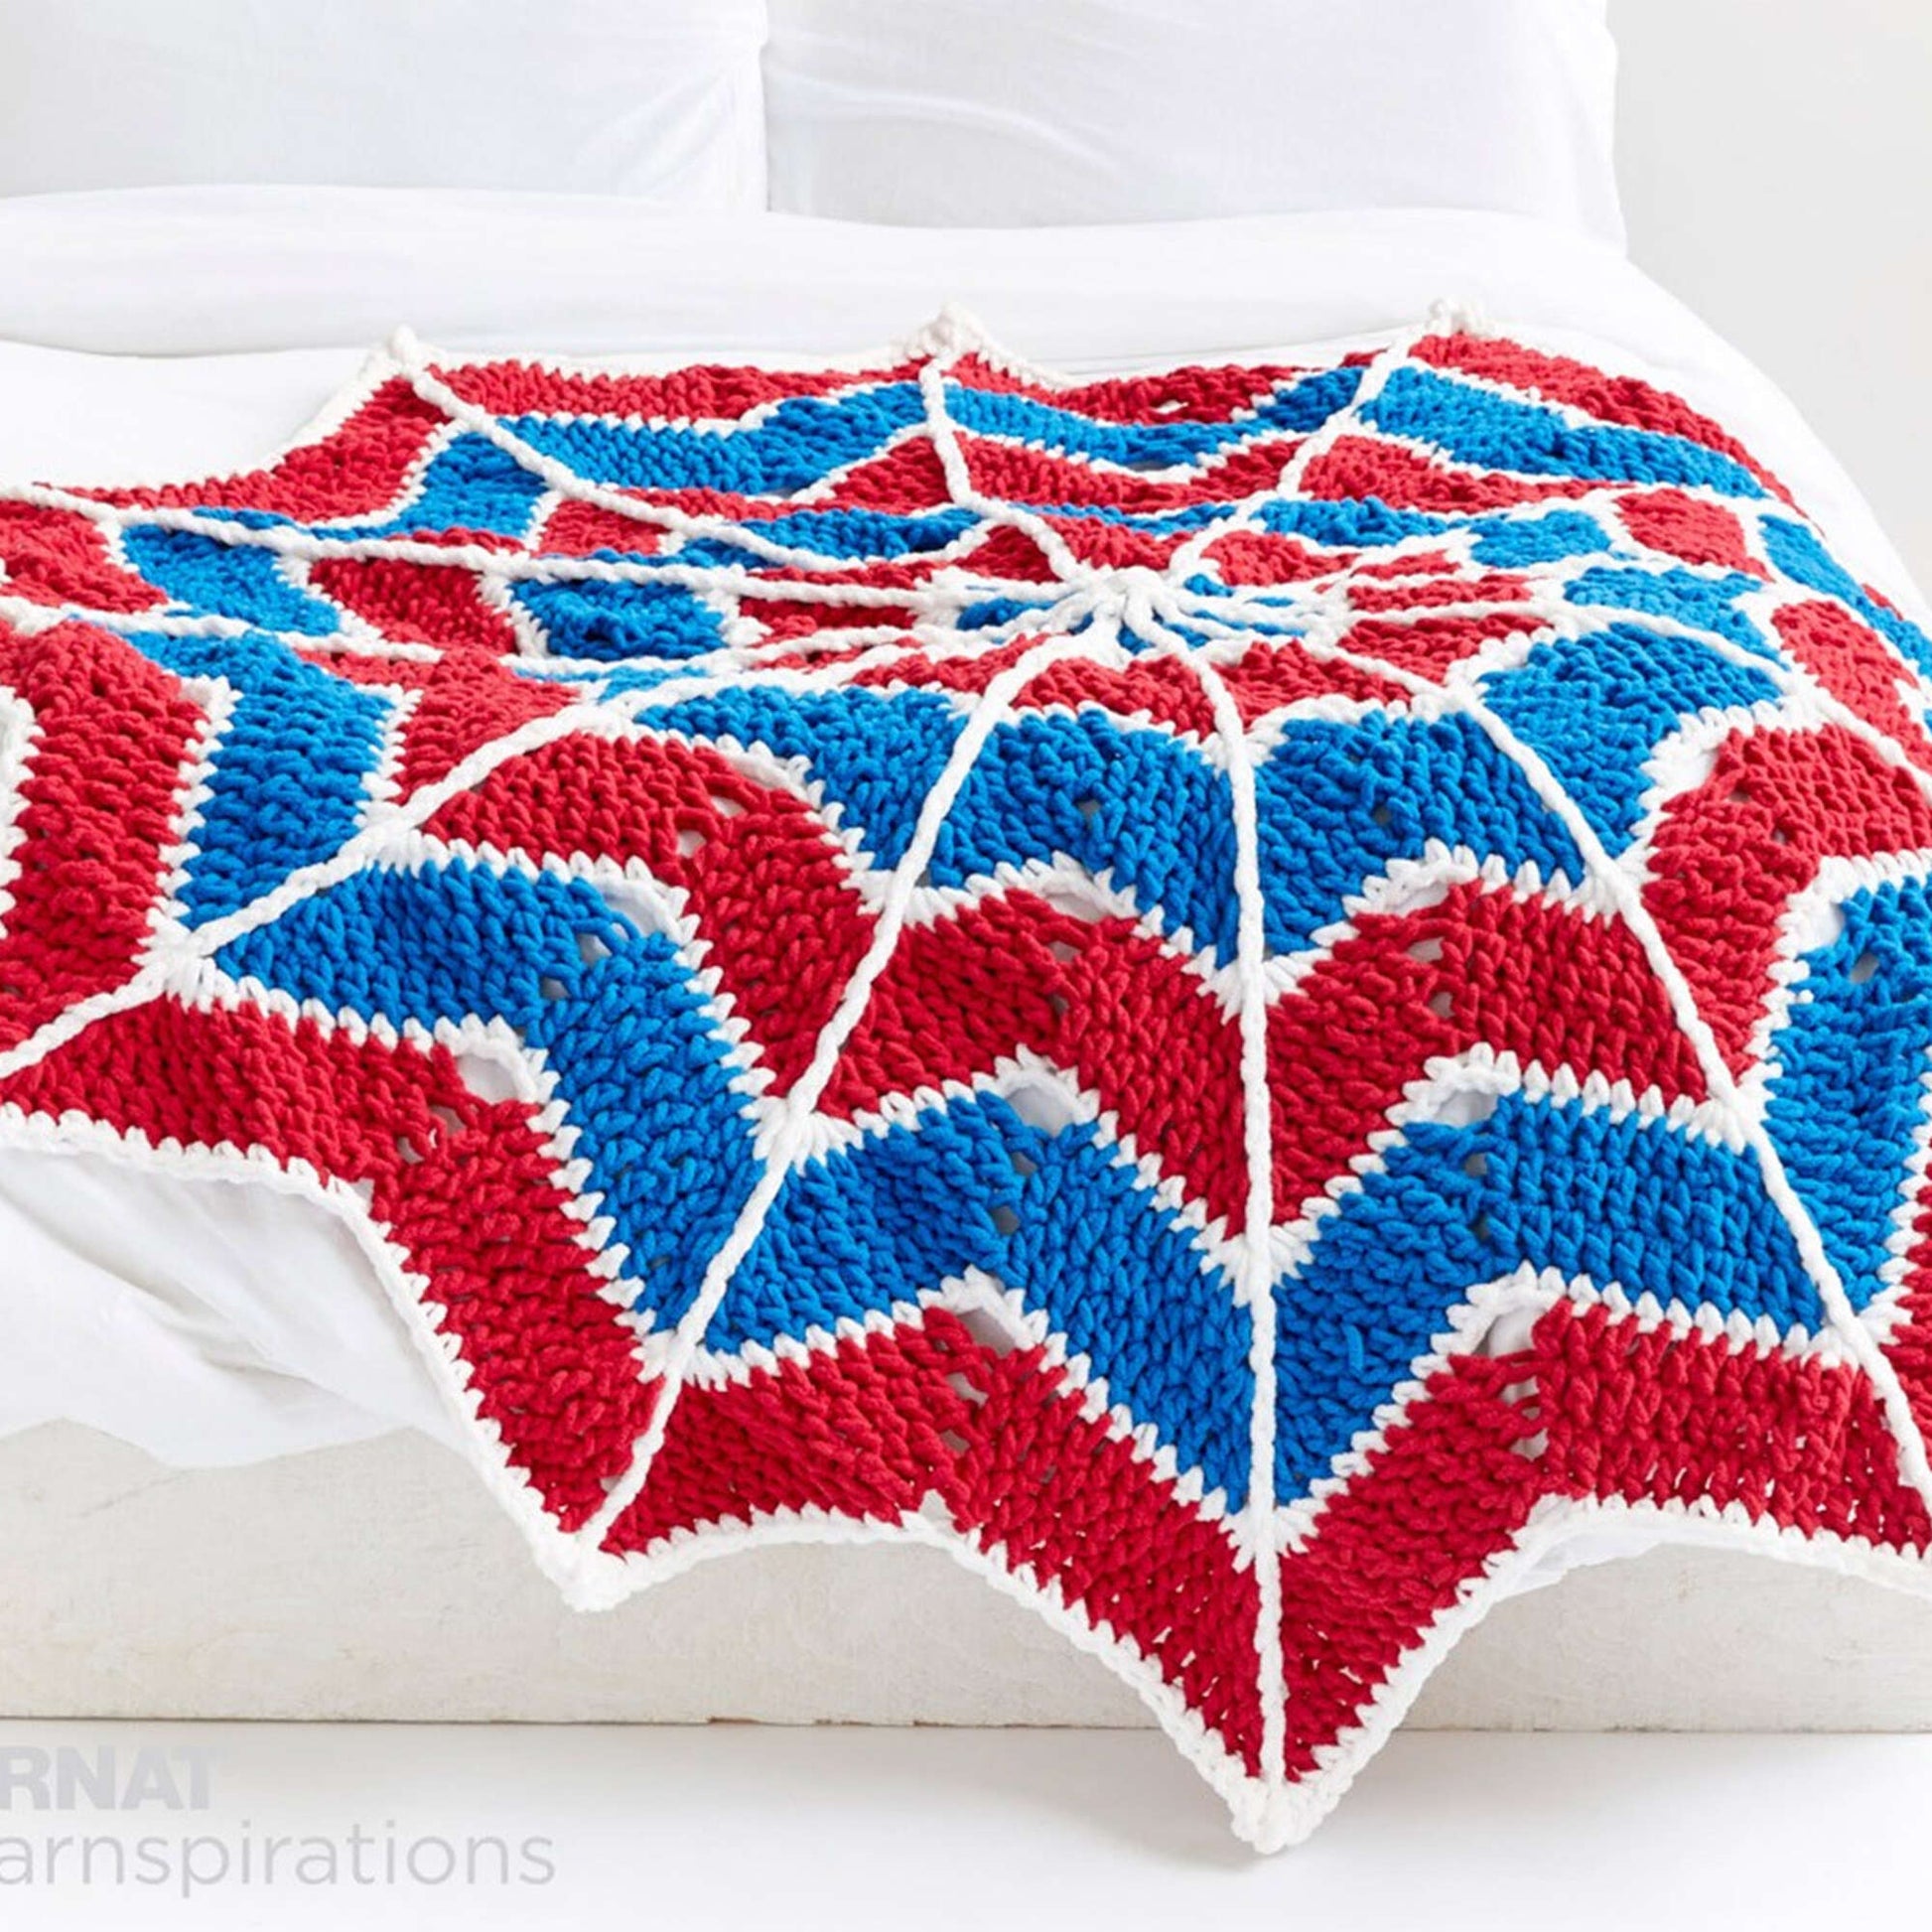 Bernat Spiderweb Crochet Blanket Crochet Blanket made in Bernat Baby Blanket yarn